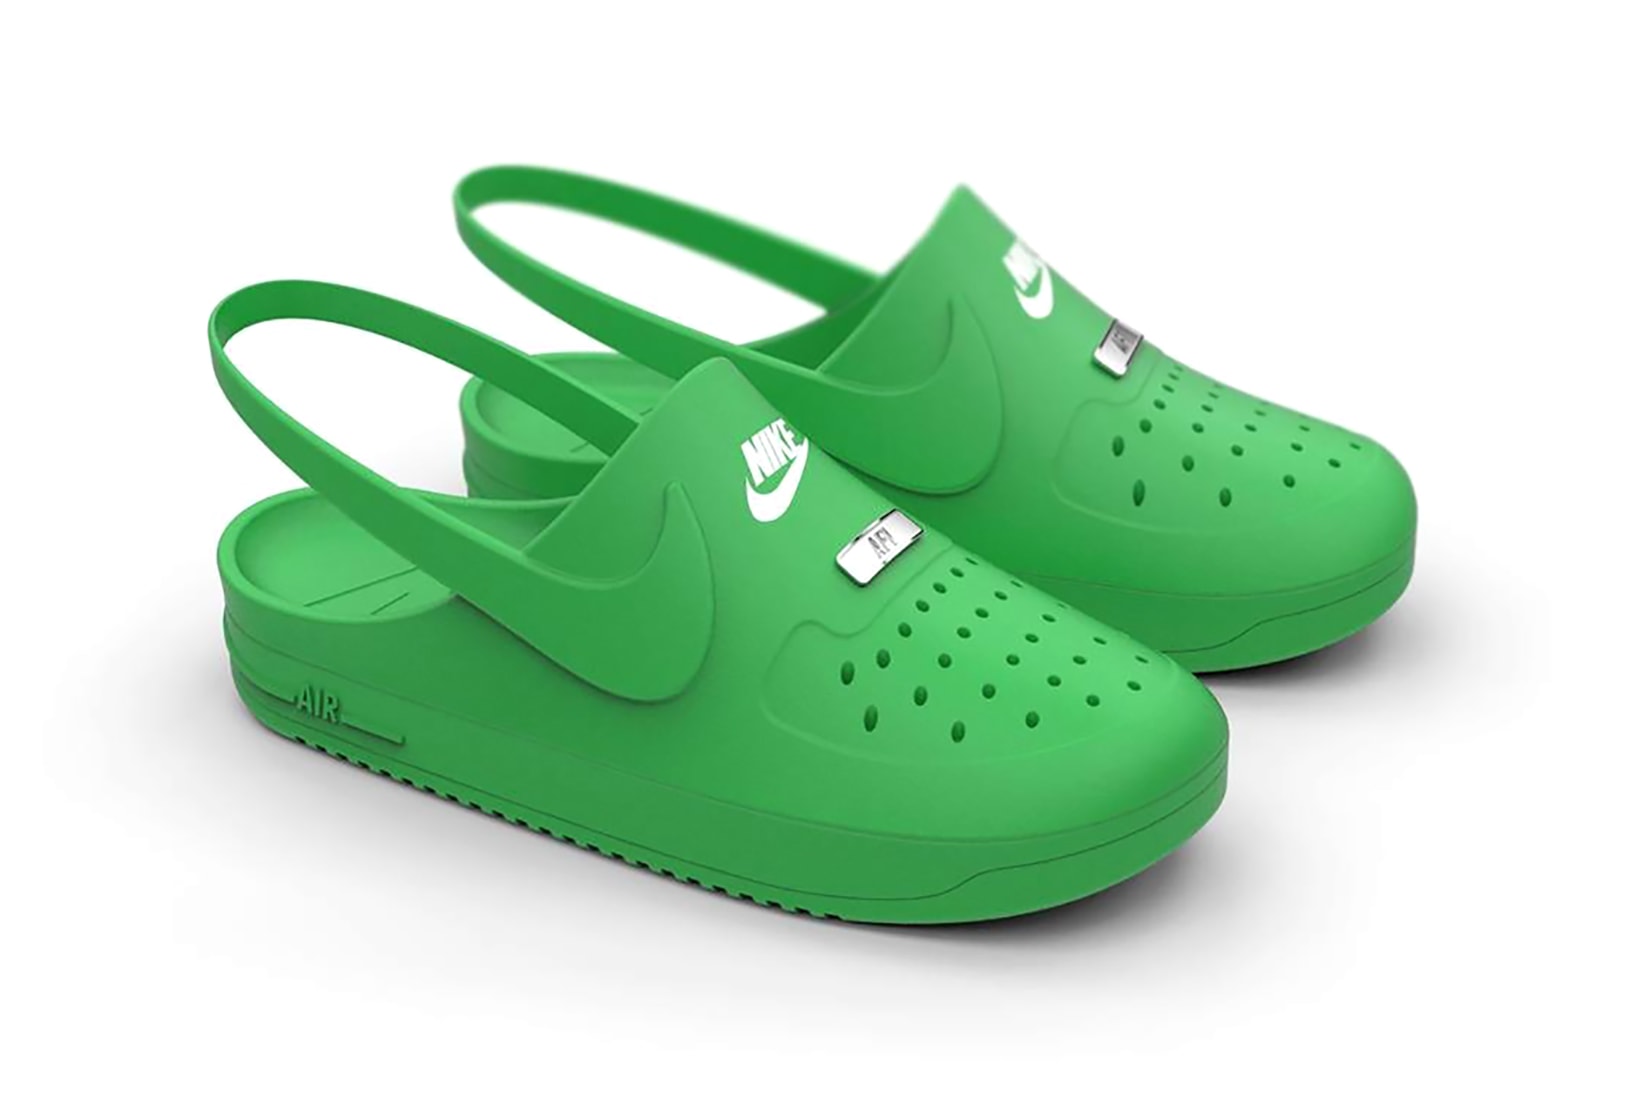 Crocs x Nike Unofficial Force 1 Clogs Design |